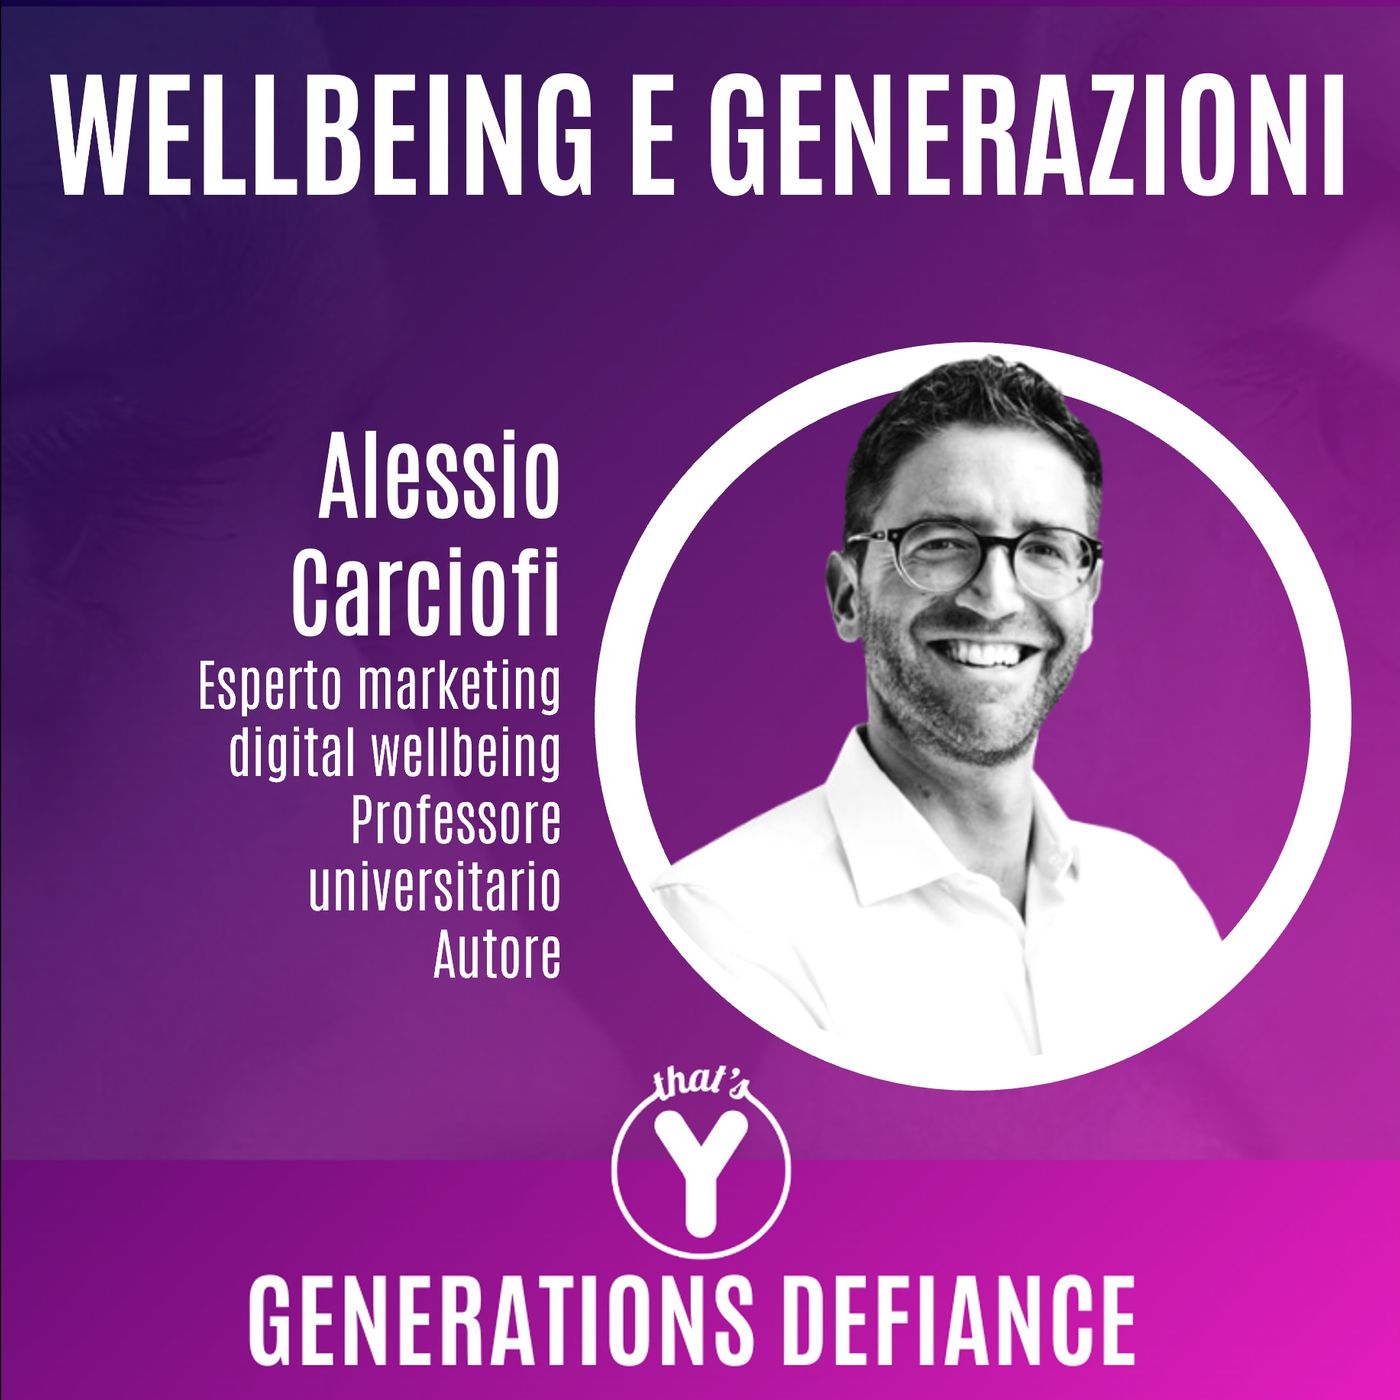 "Wellbeing e Generazioni" con Alessio Carciofi [Generations Defiance]